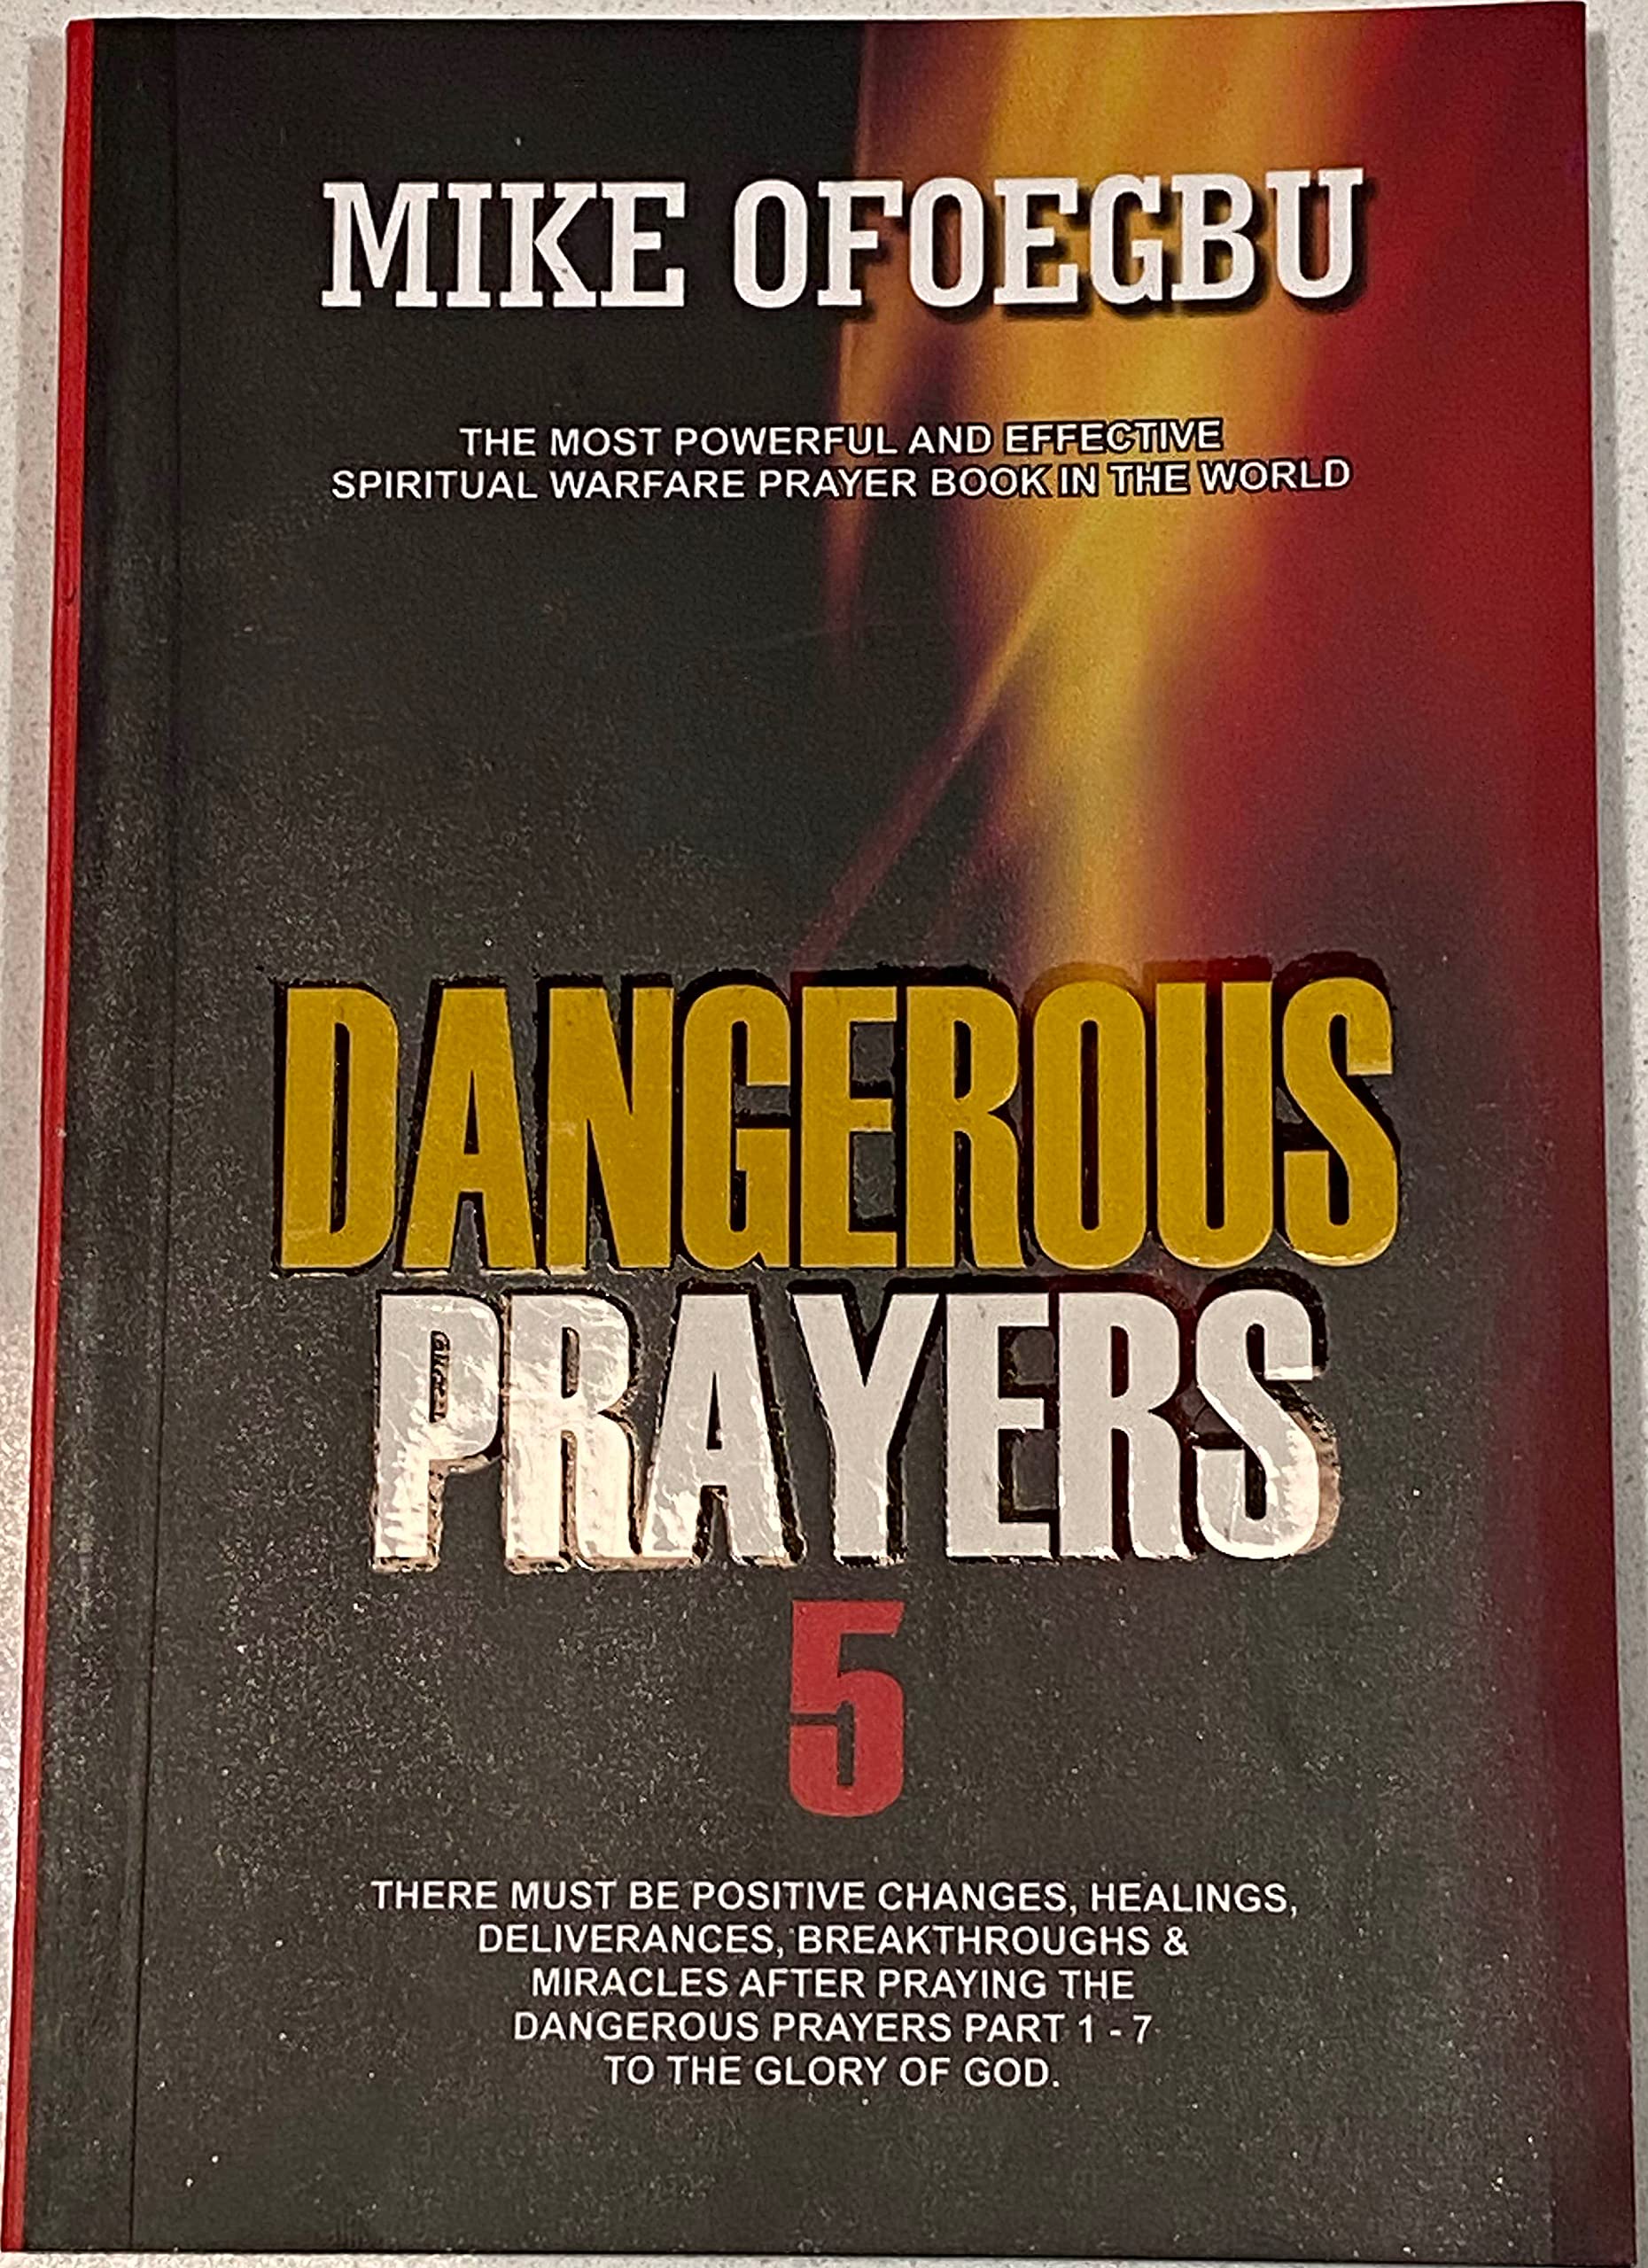 Dangerous Prayers Pt 5 (Revised) PB - Mike Ofoegbu